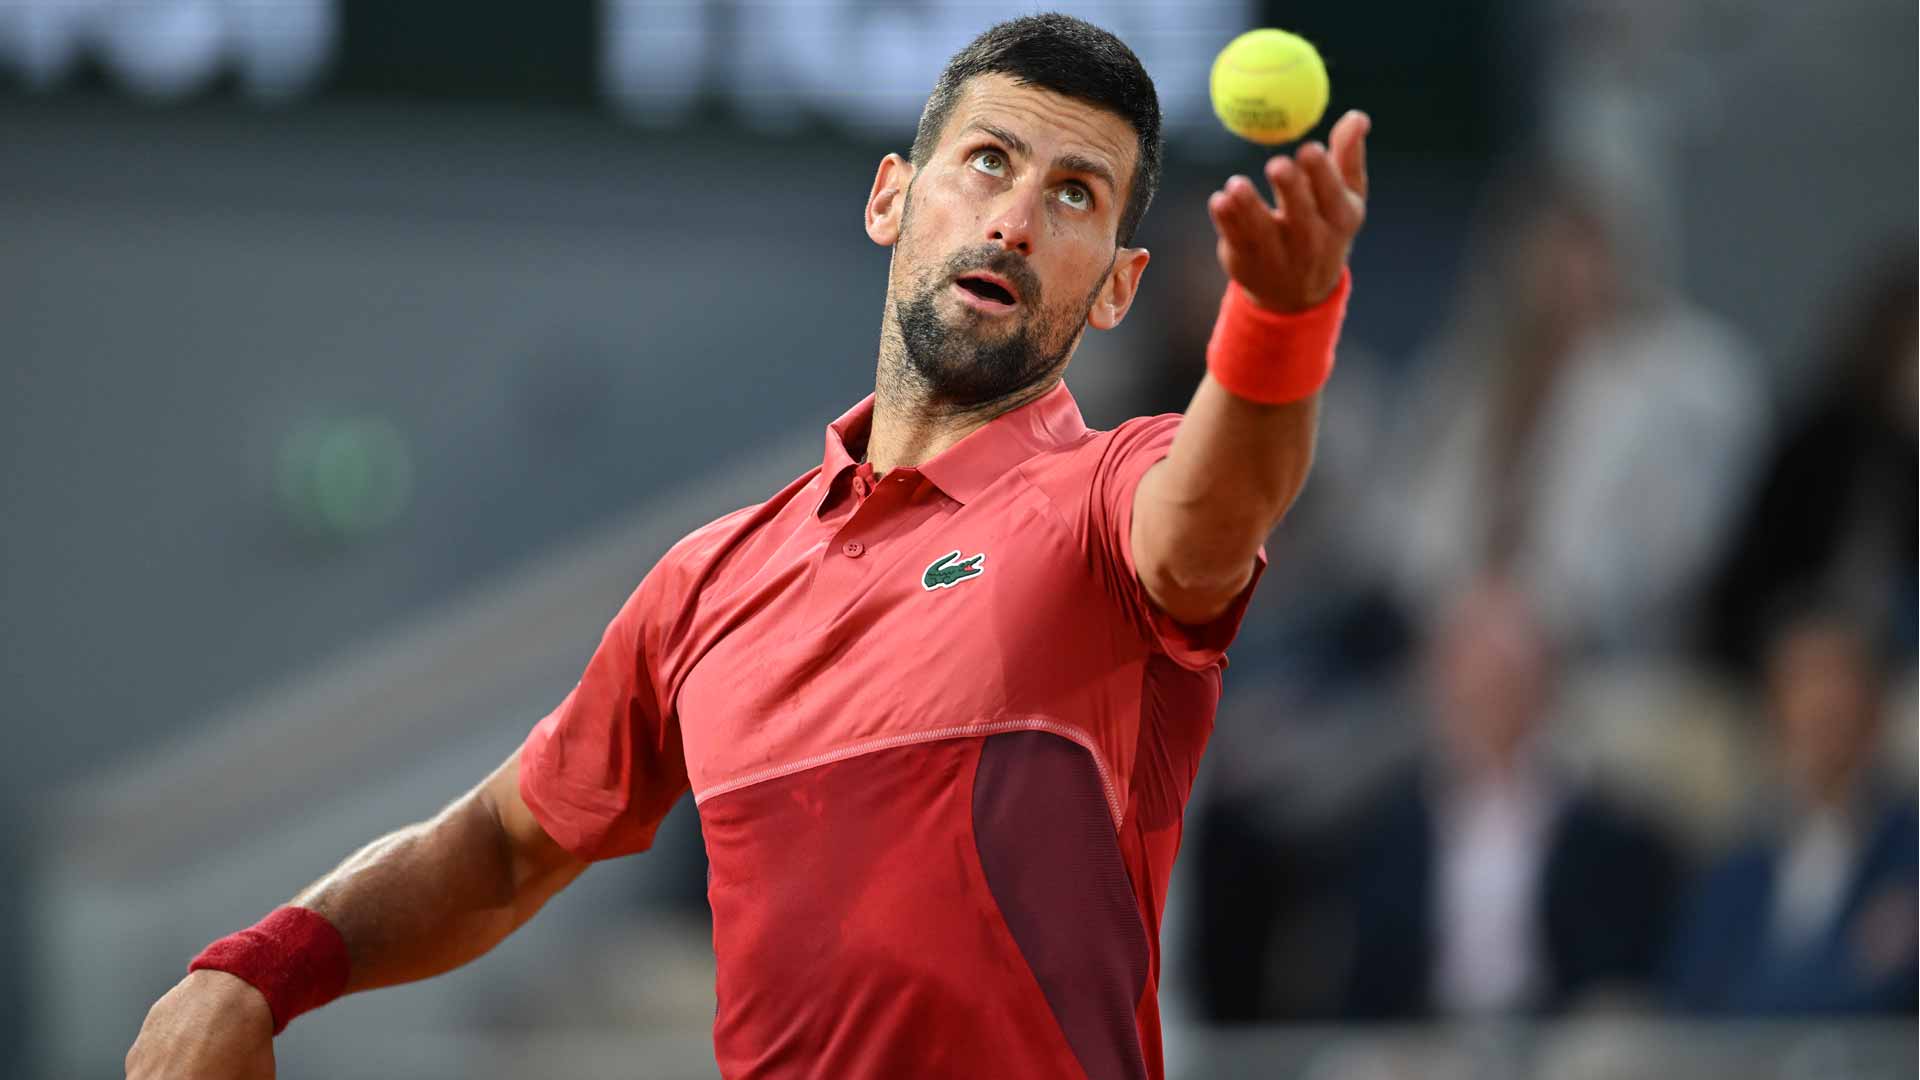 Djokovic reveals successful knee surgery following Roland Garros withdrawal